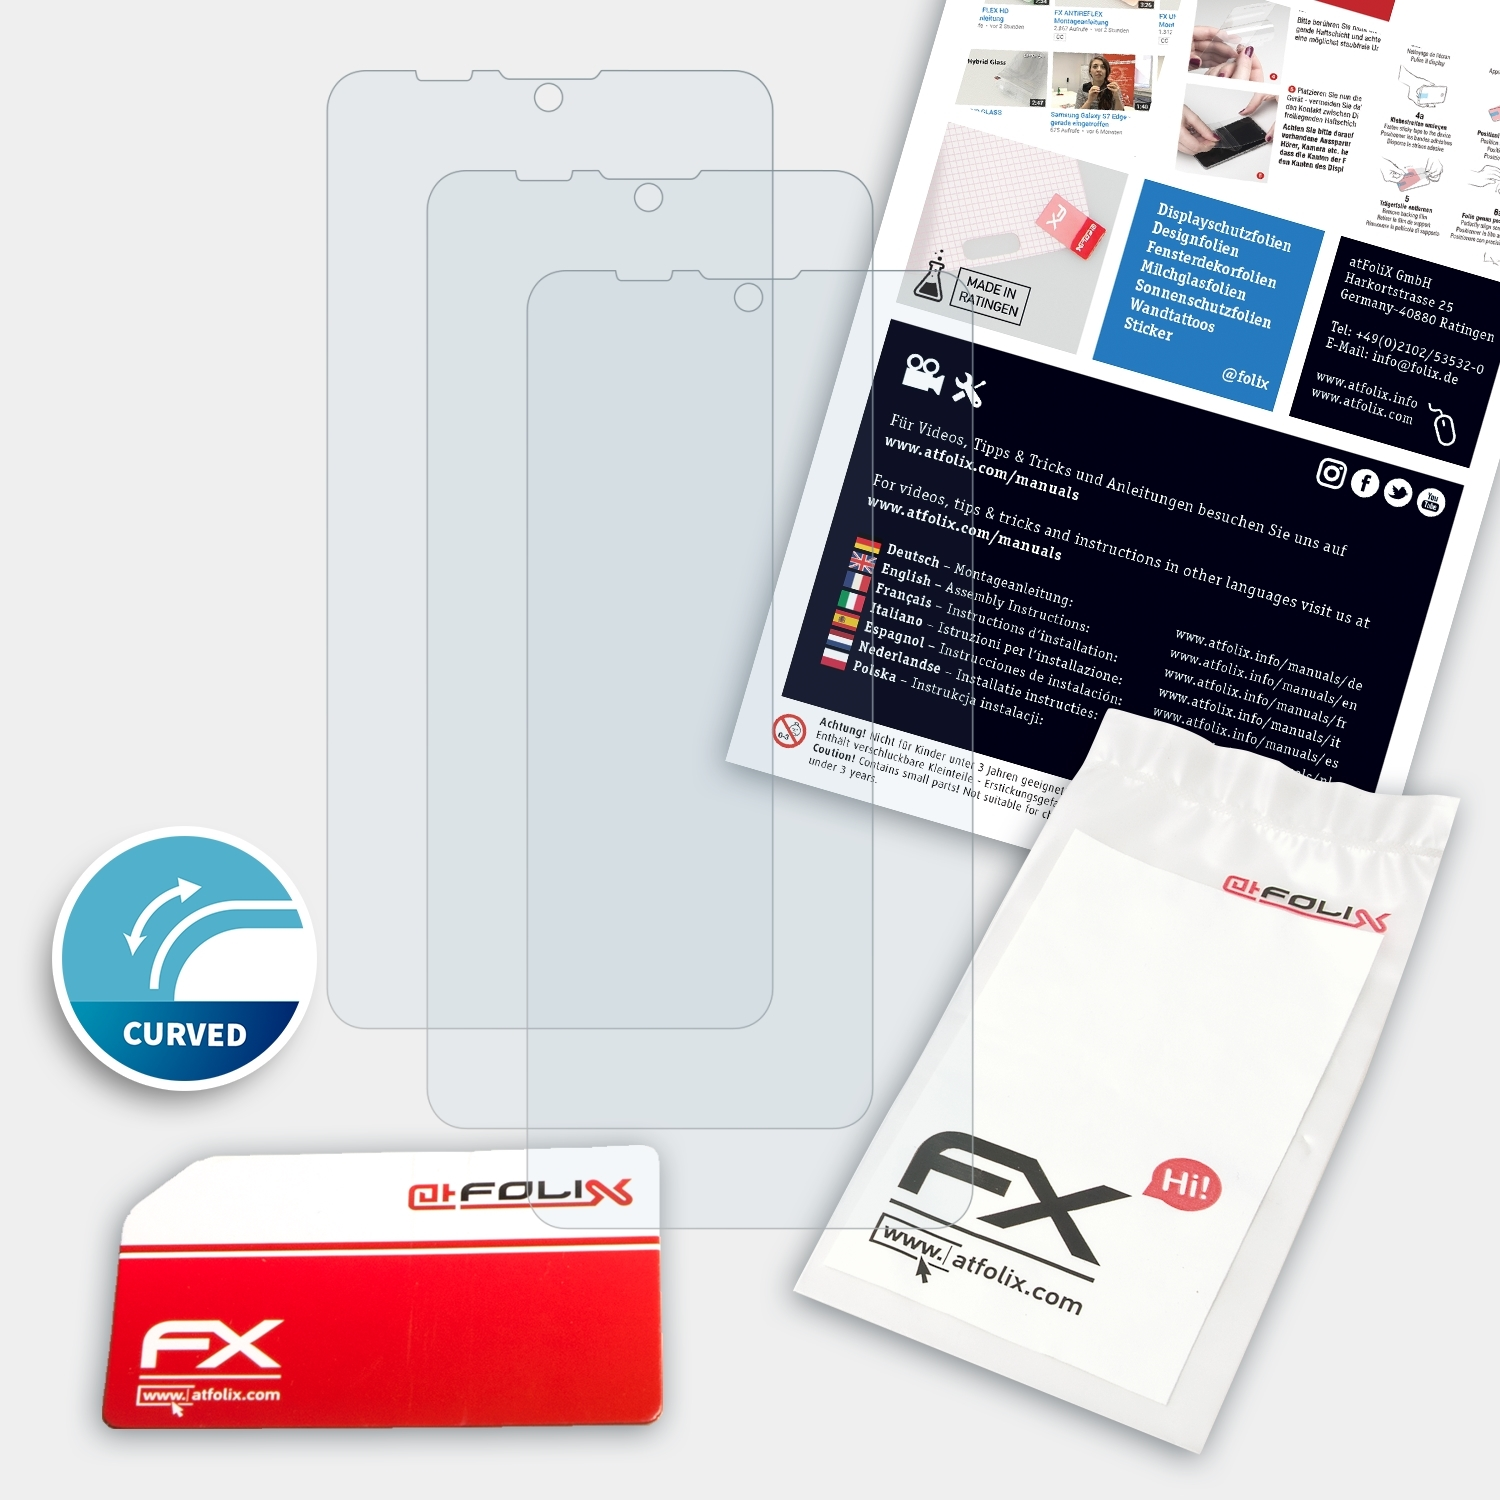 ATFOLIX 3x FX-ActiFleX Displayschutz(für Blackview Pro) A80